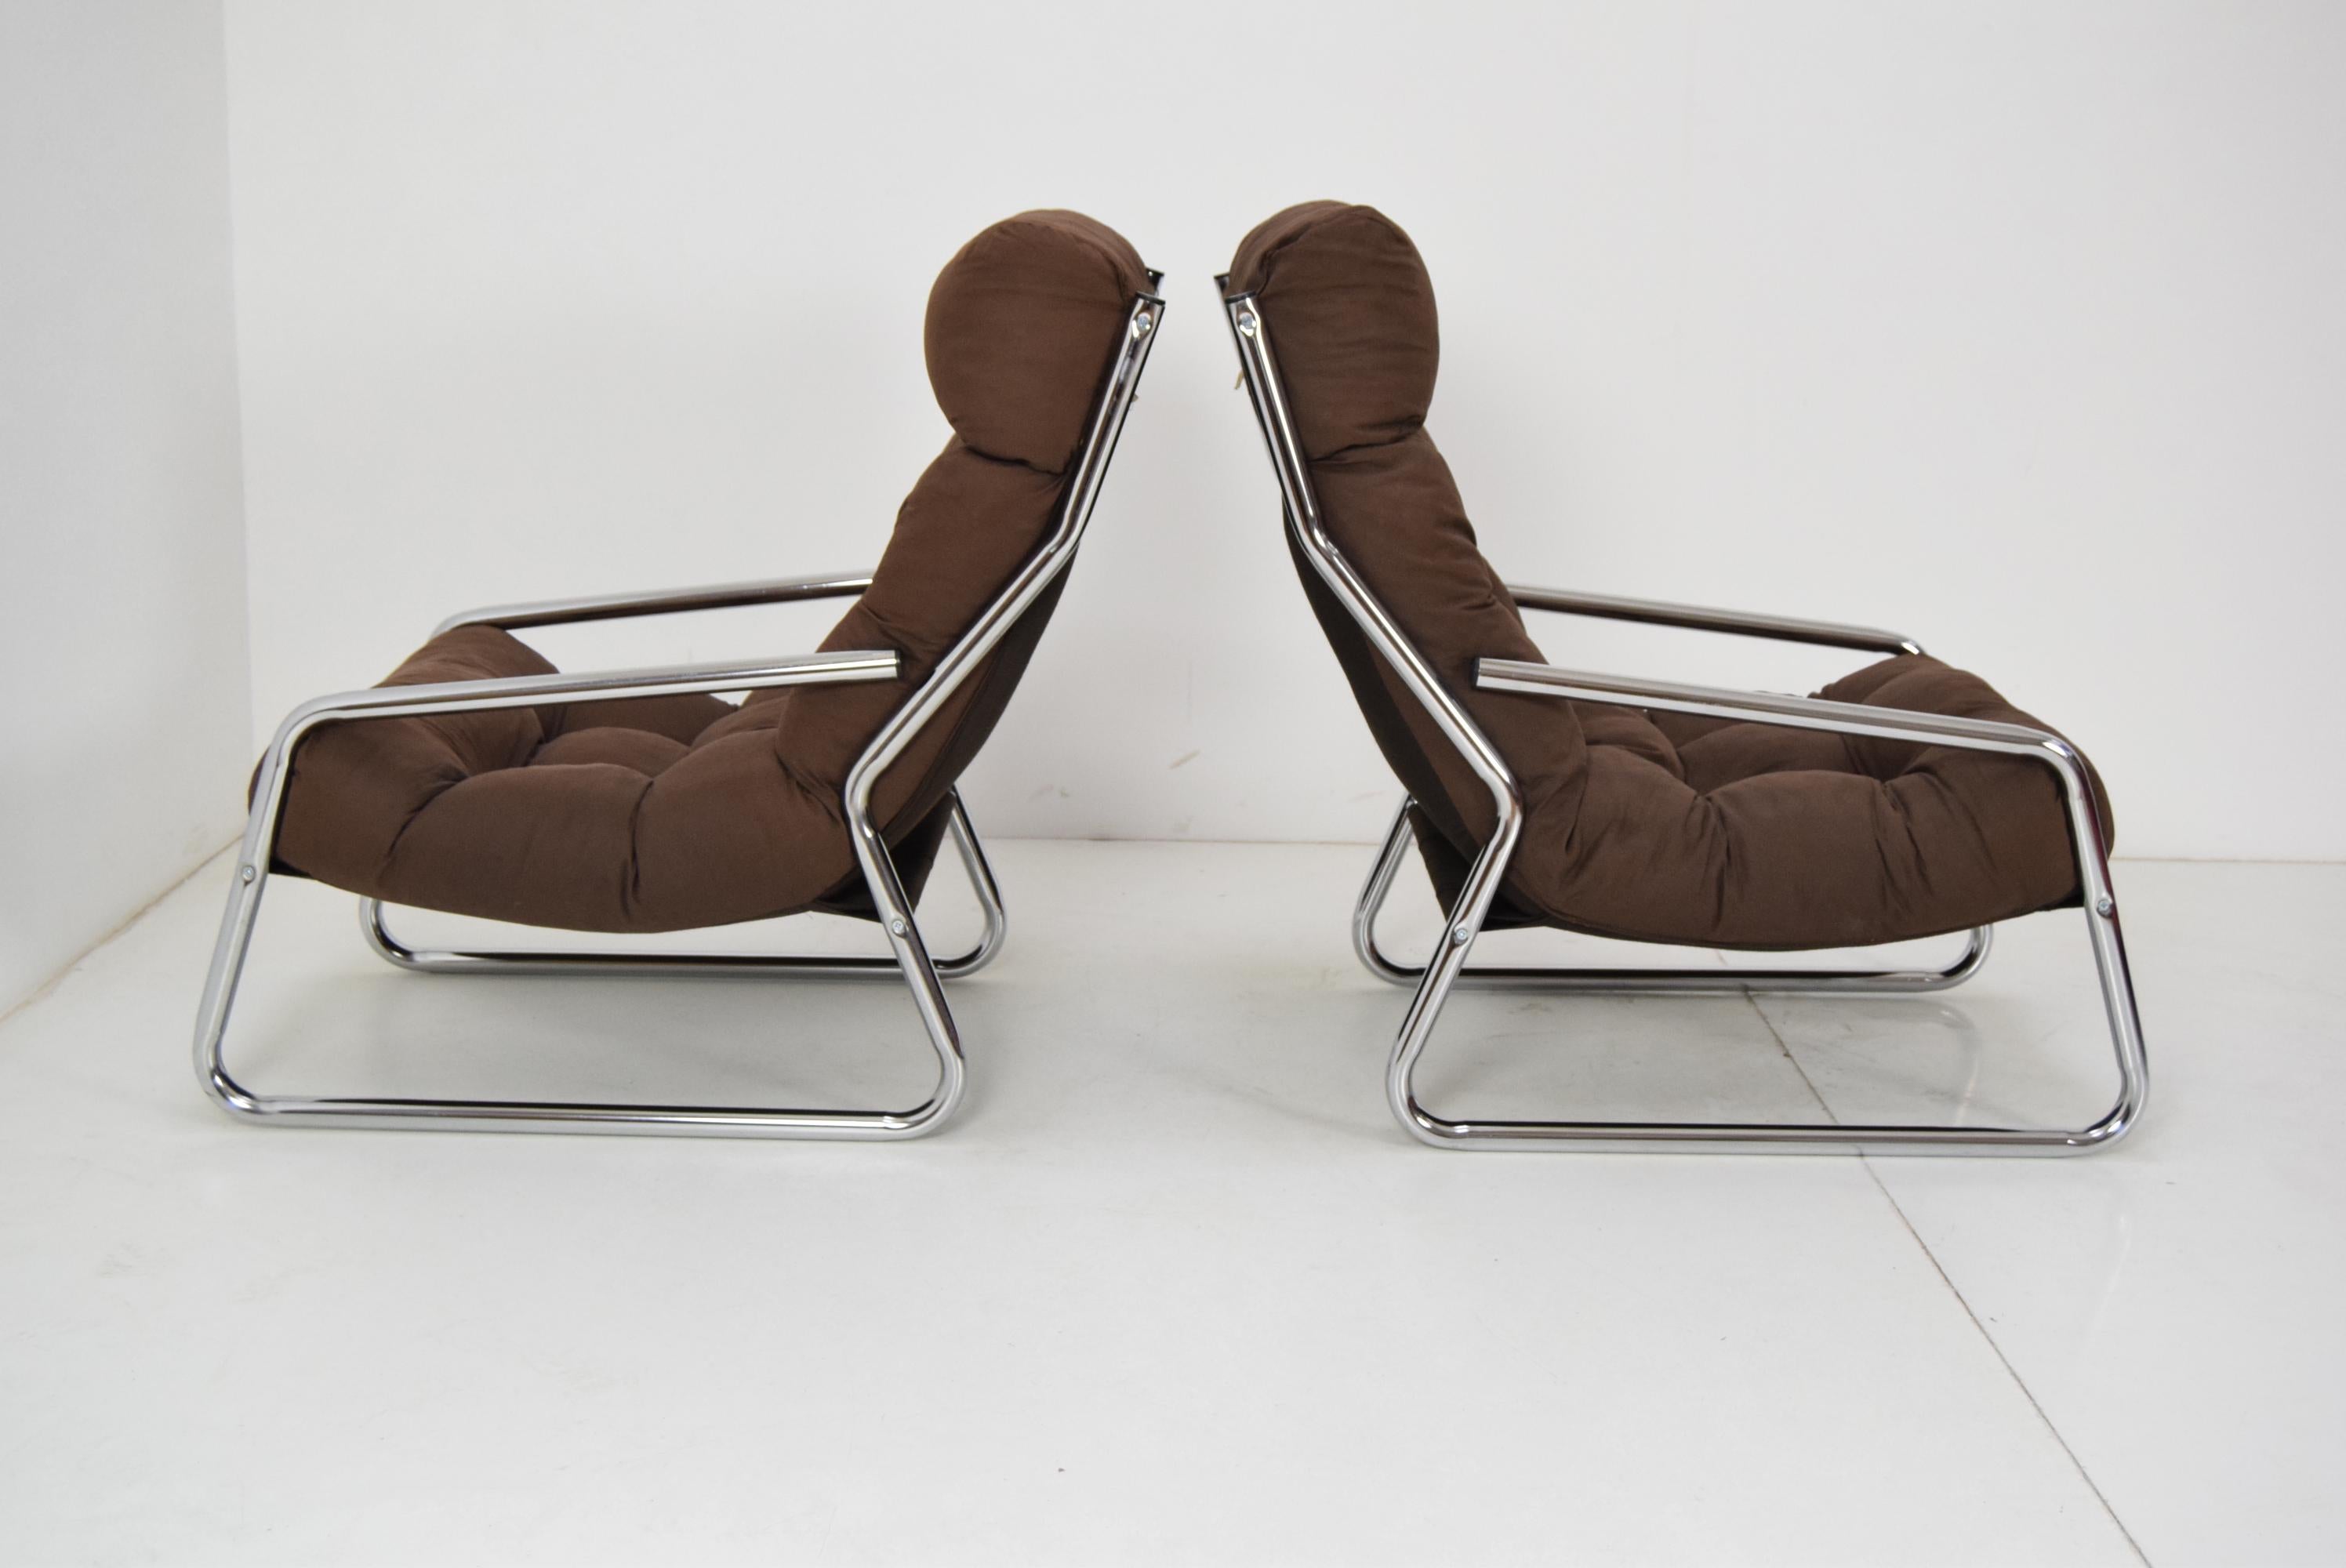 Czech Pair of Midcentury Chrome Armchairs, 1970s